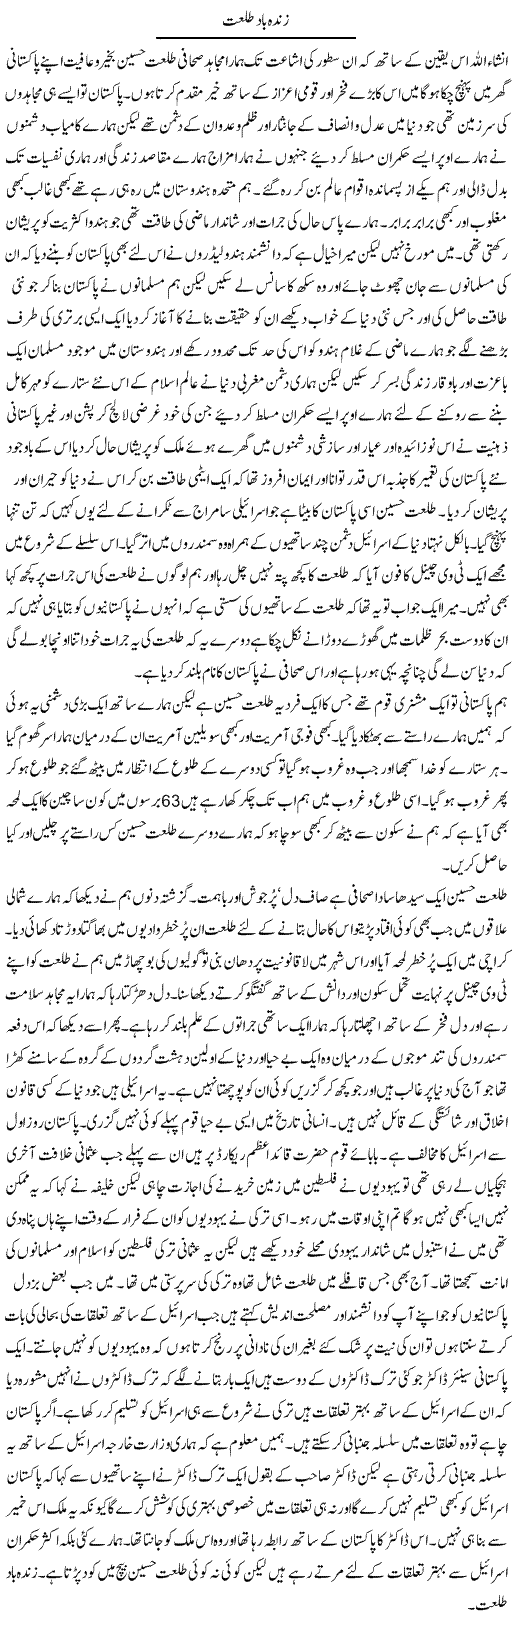 Zindabad Talat Express Column Abdul Qadir Hasan 3 June 2010